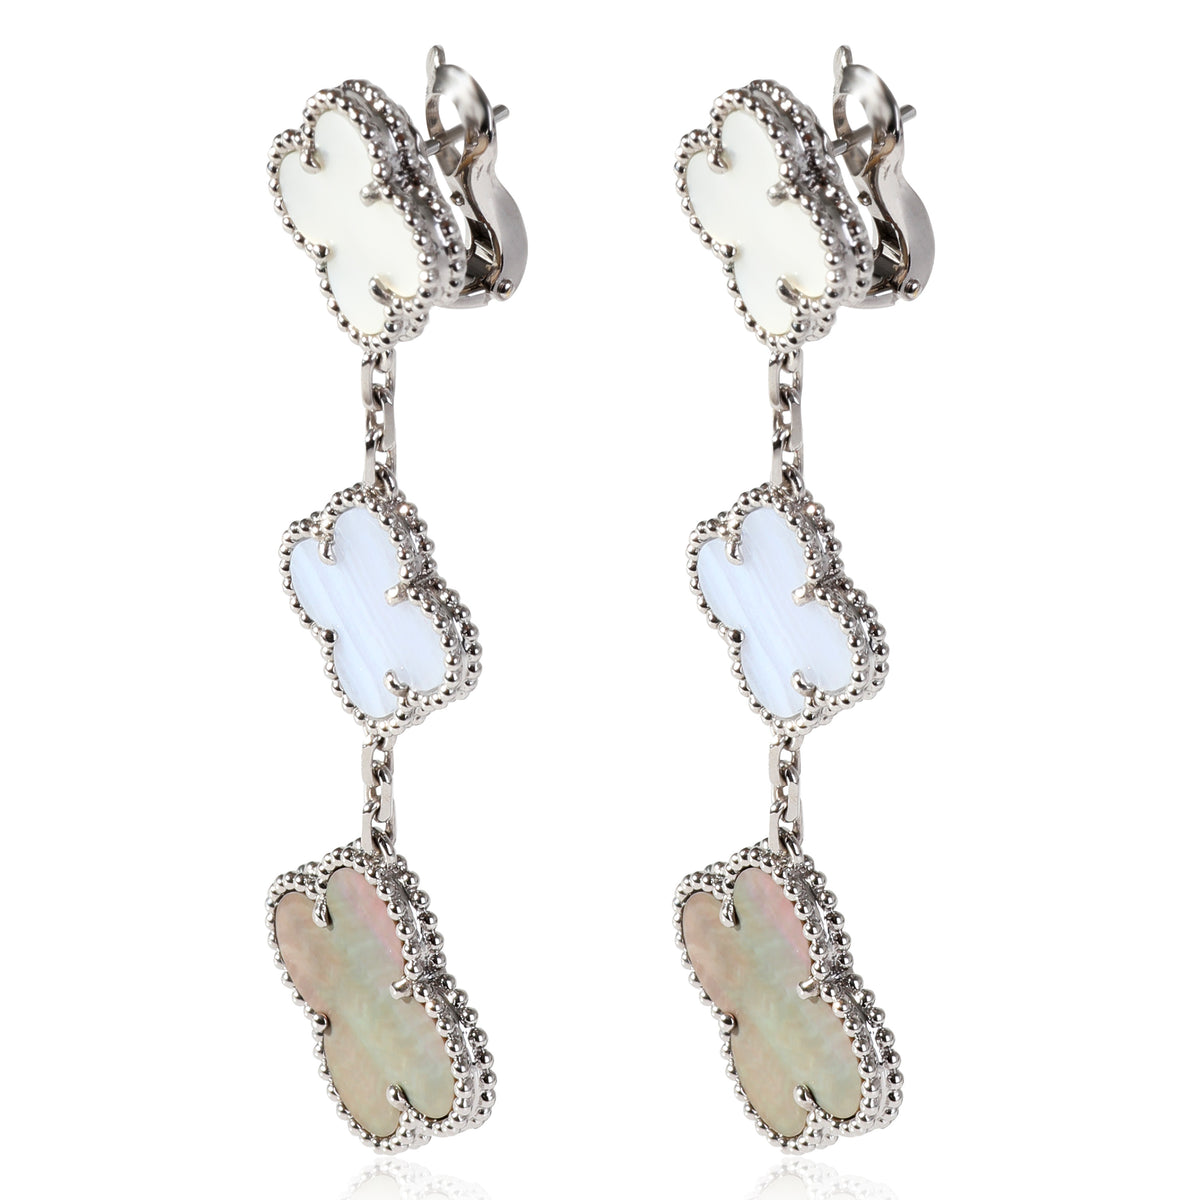 Van Cleef & Arpels Magic Alhambra White and Black Mother of Pearl  Earrings